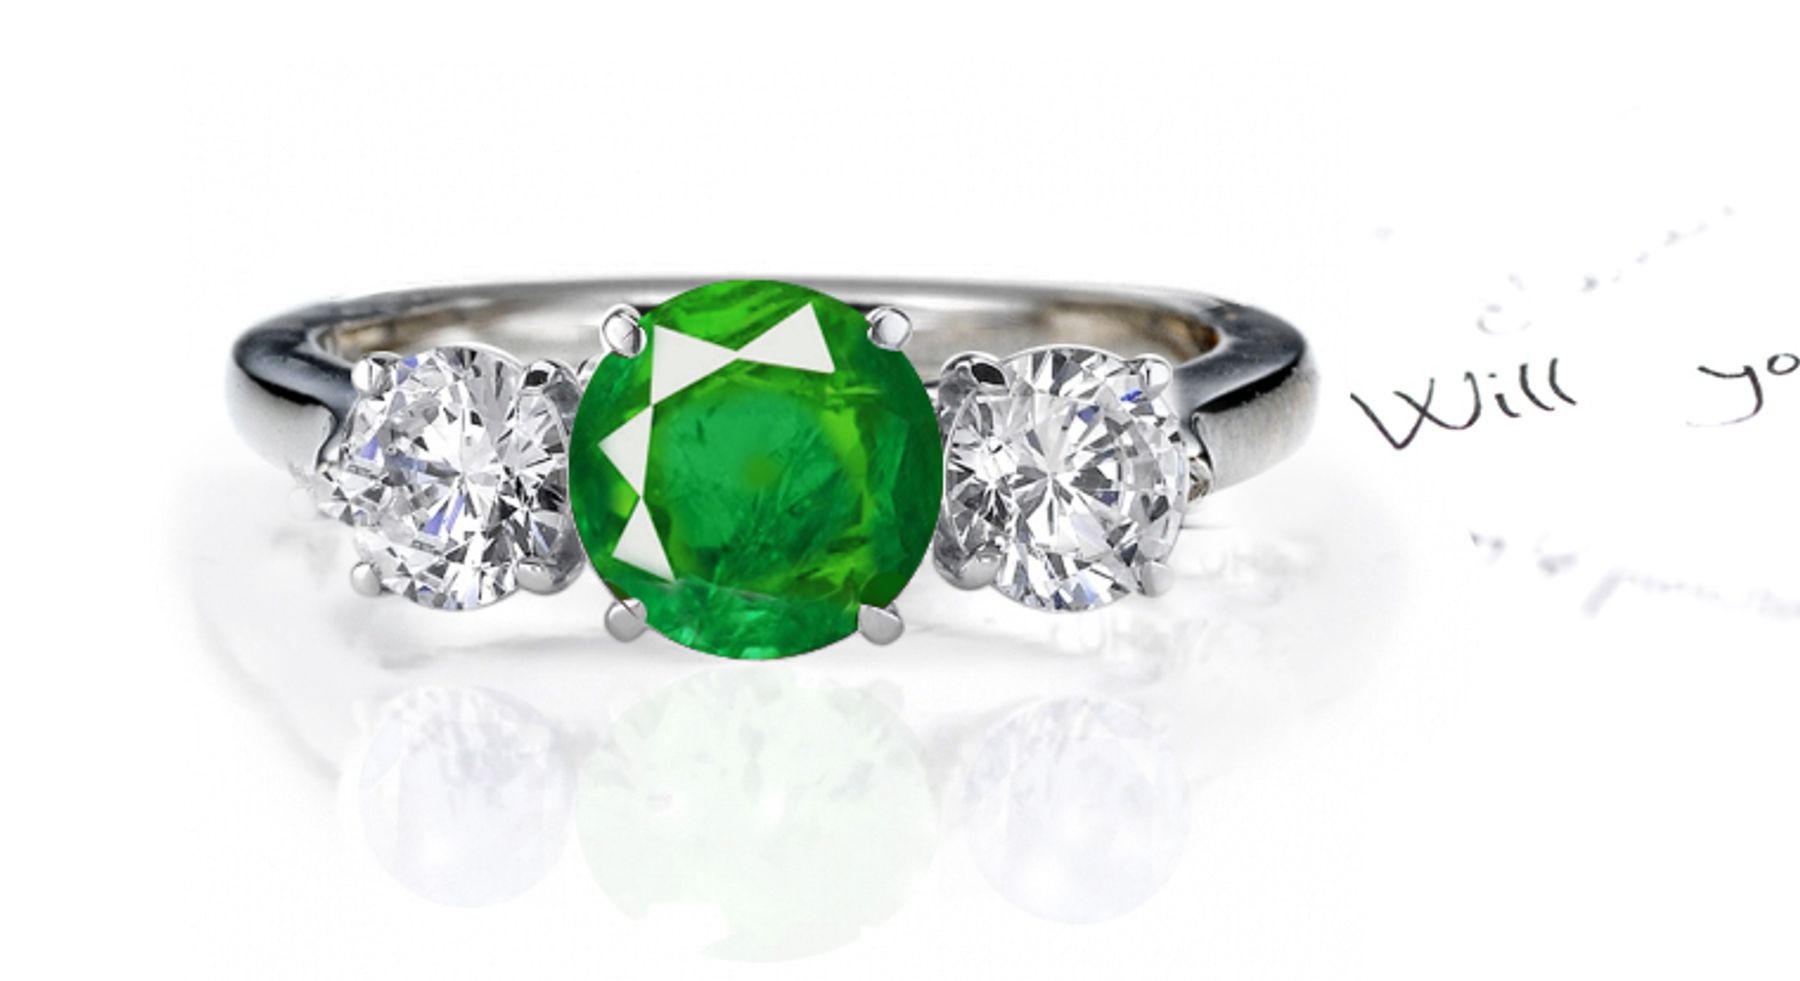 Exclusive Designs: Pretty Emerald & Diamond Three-Stone Ring in 14k White Gold 1 - 5 cts